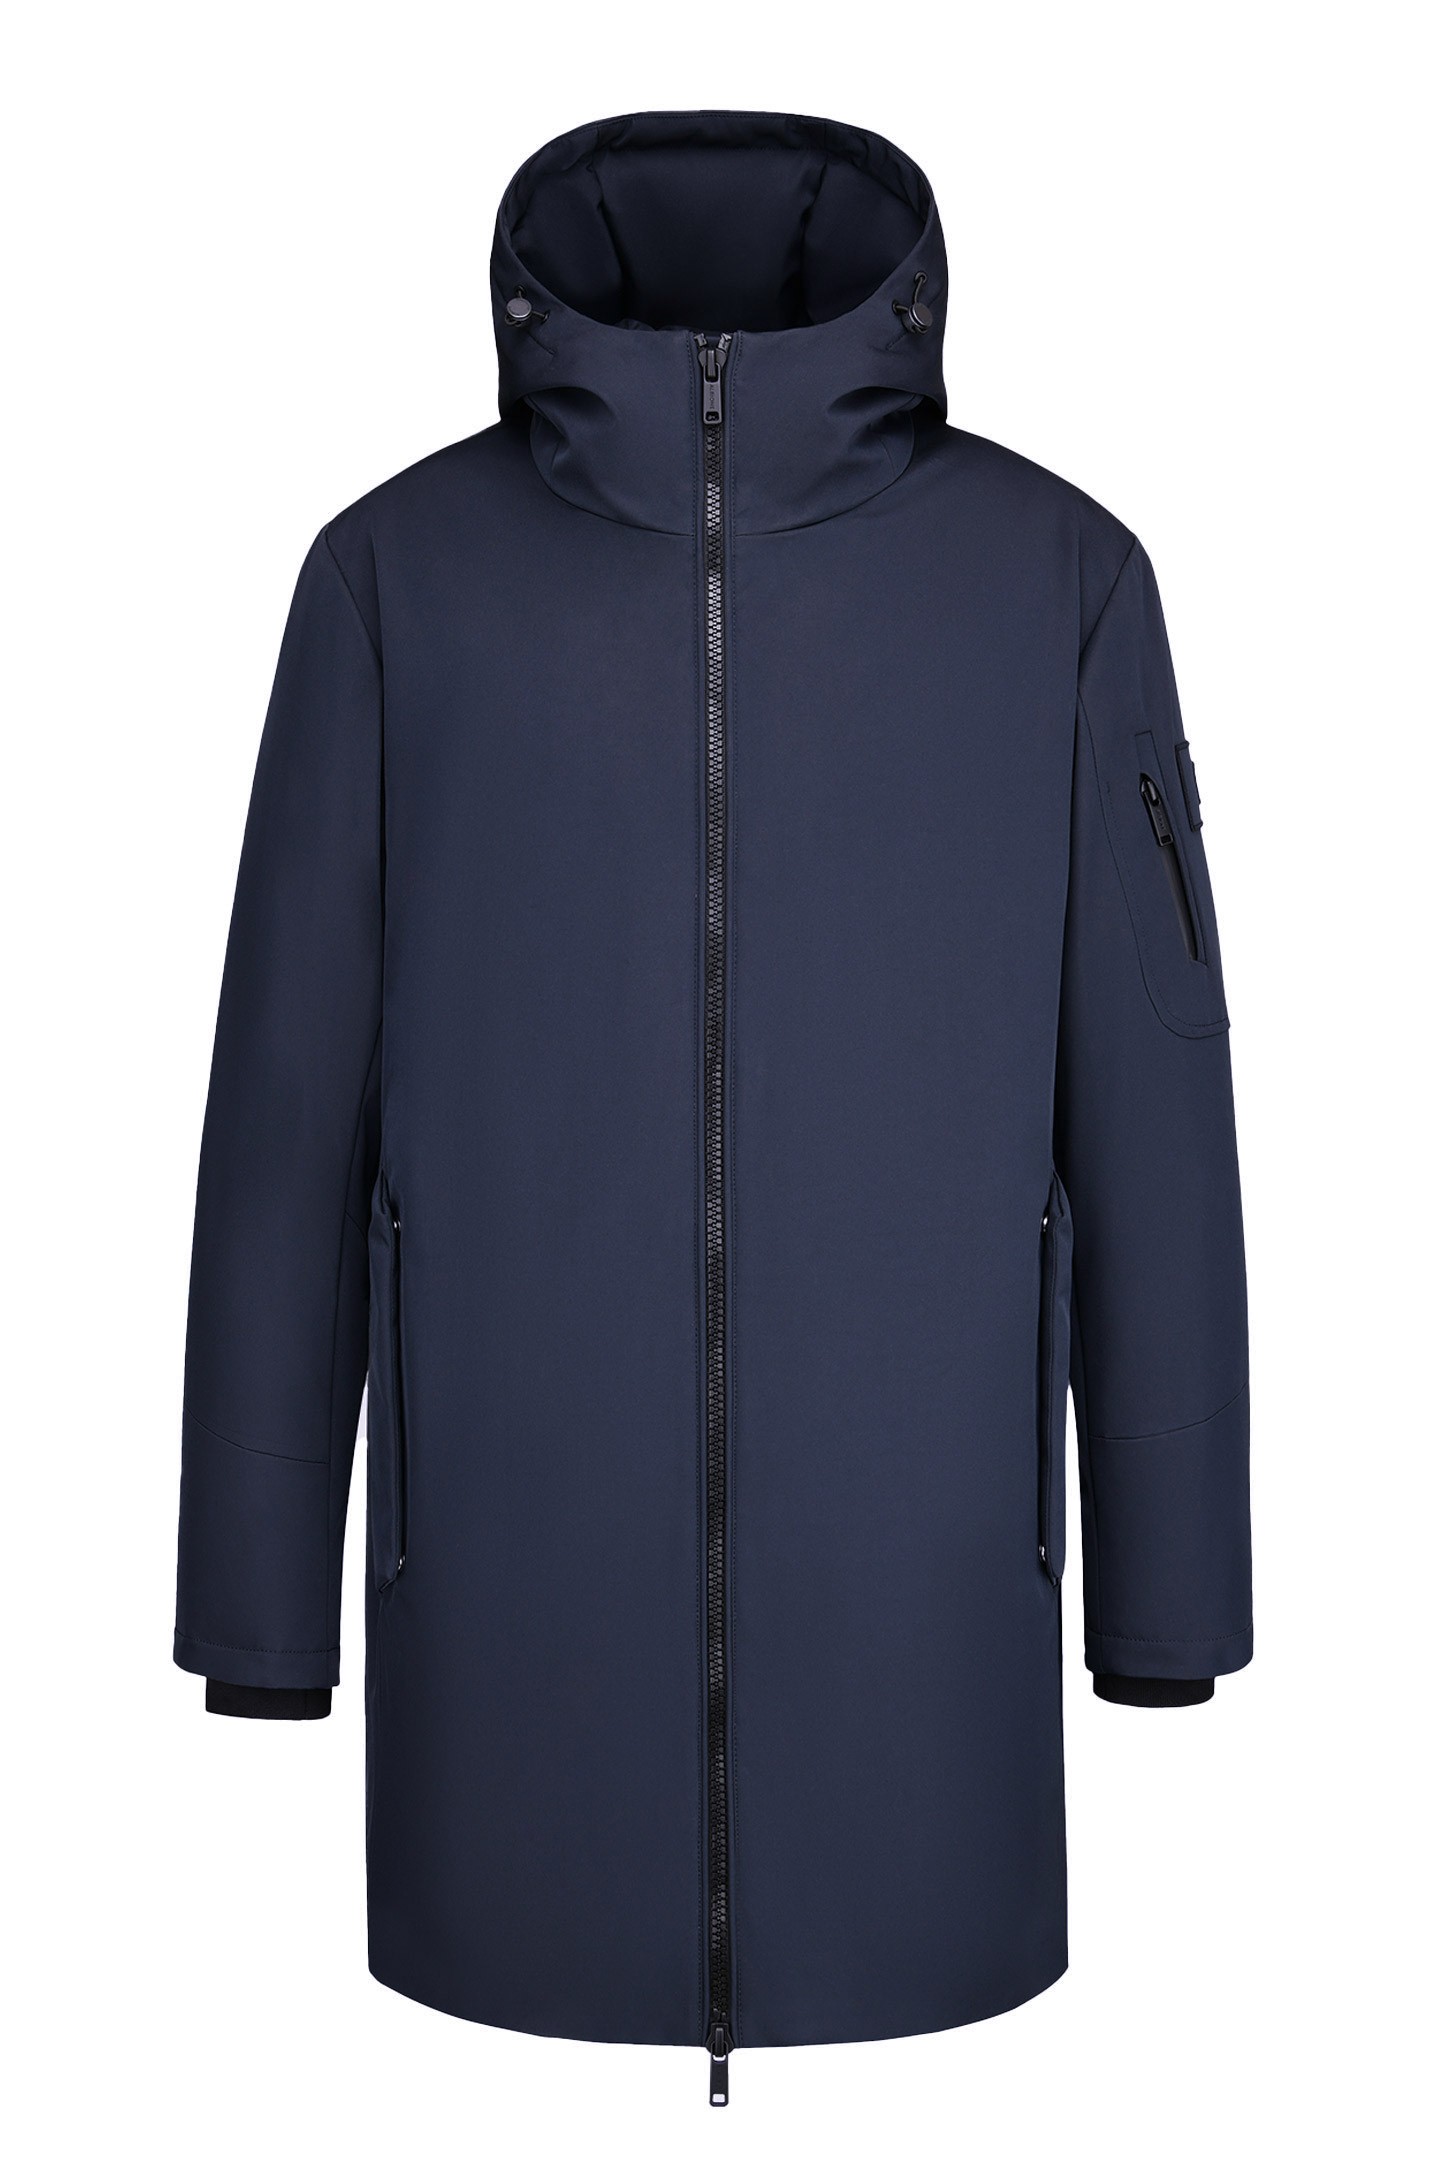 Куртка Albione 274Jm, цвет темно-синий, размер 60 - фото 1